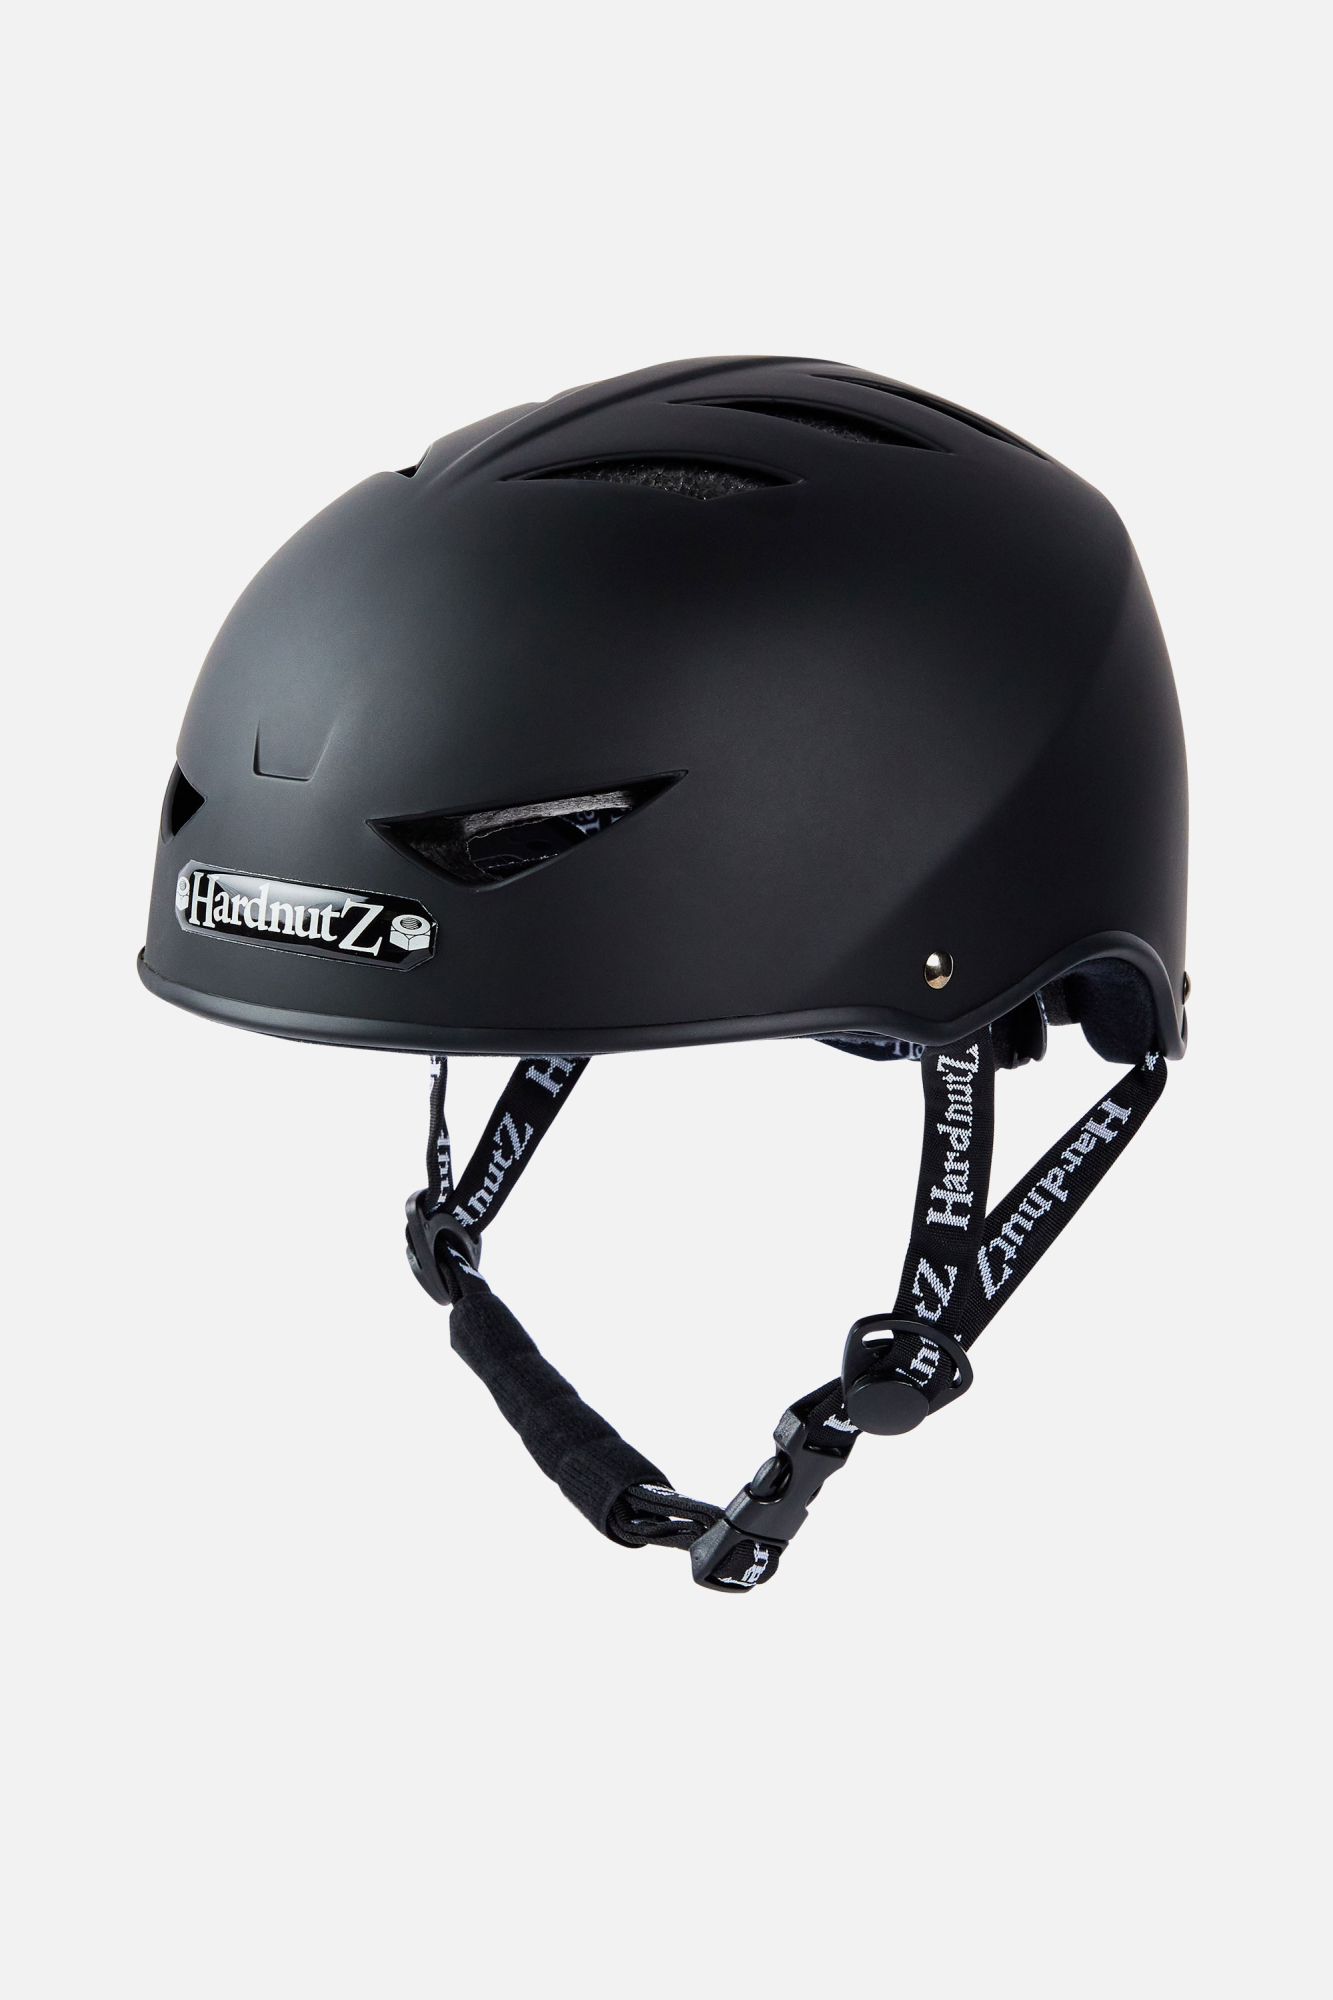 Hardnutz Unisex Street Helmet Black - Size: Small